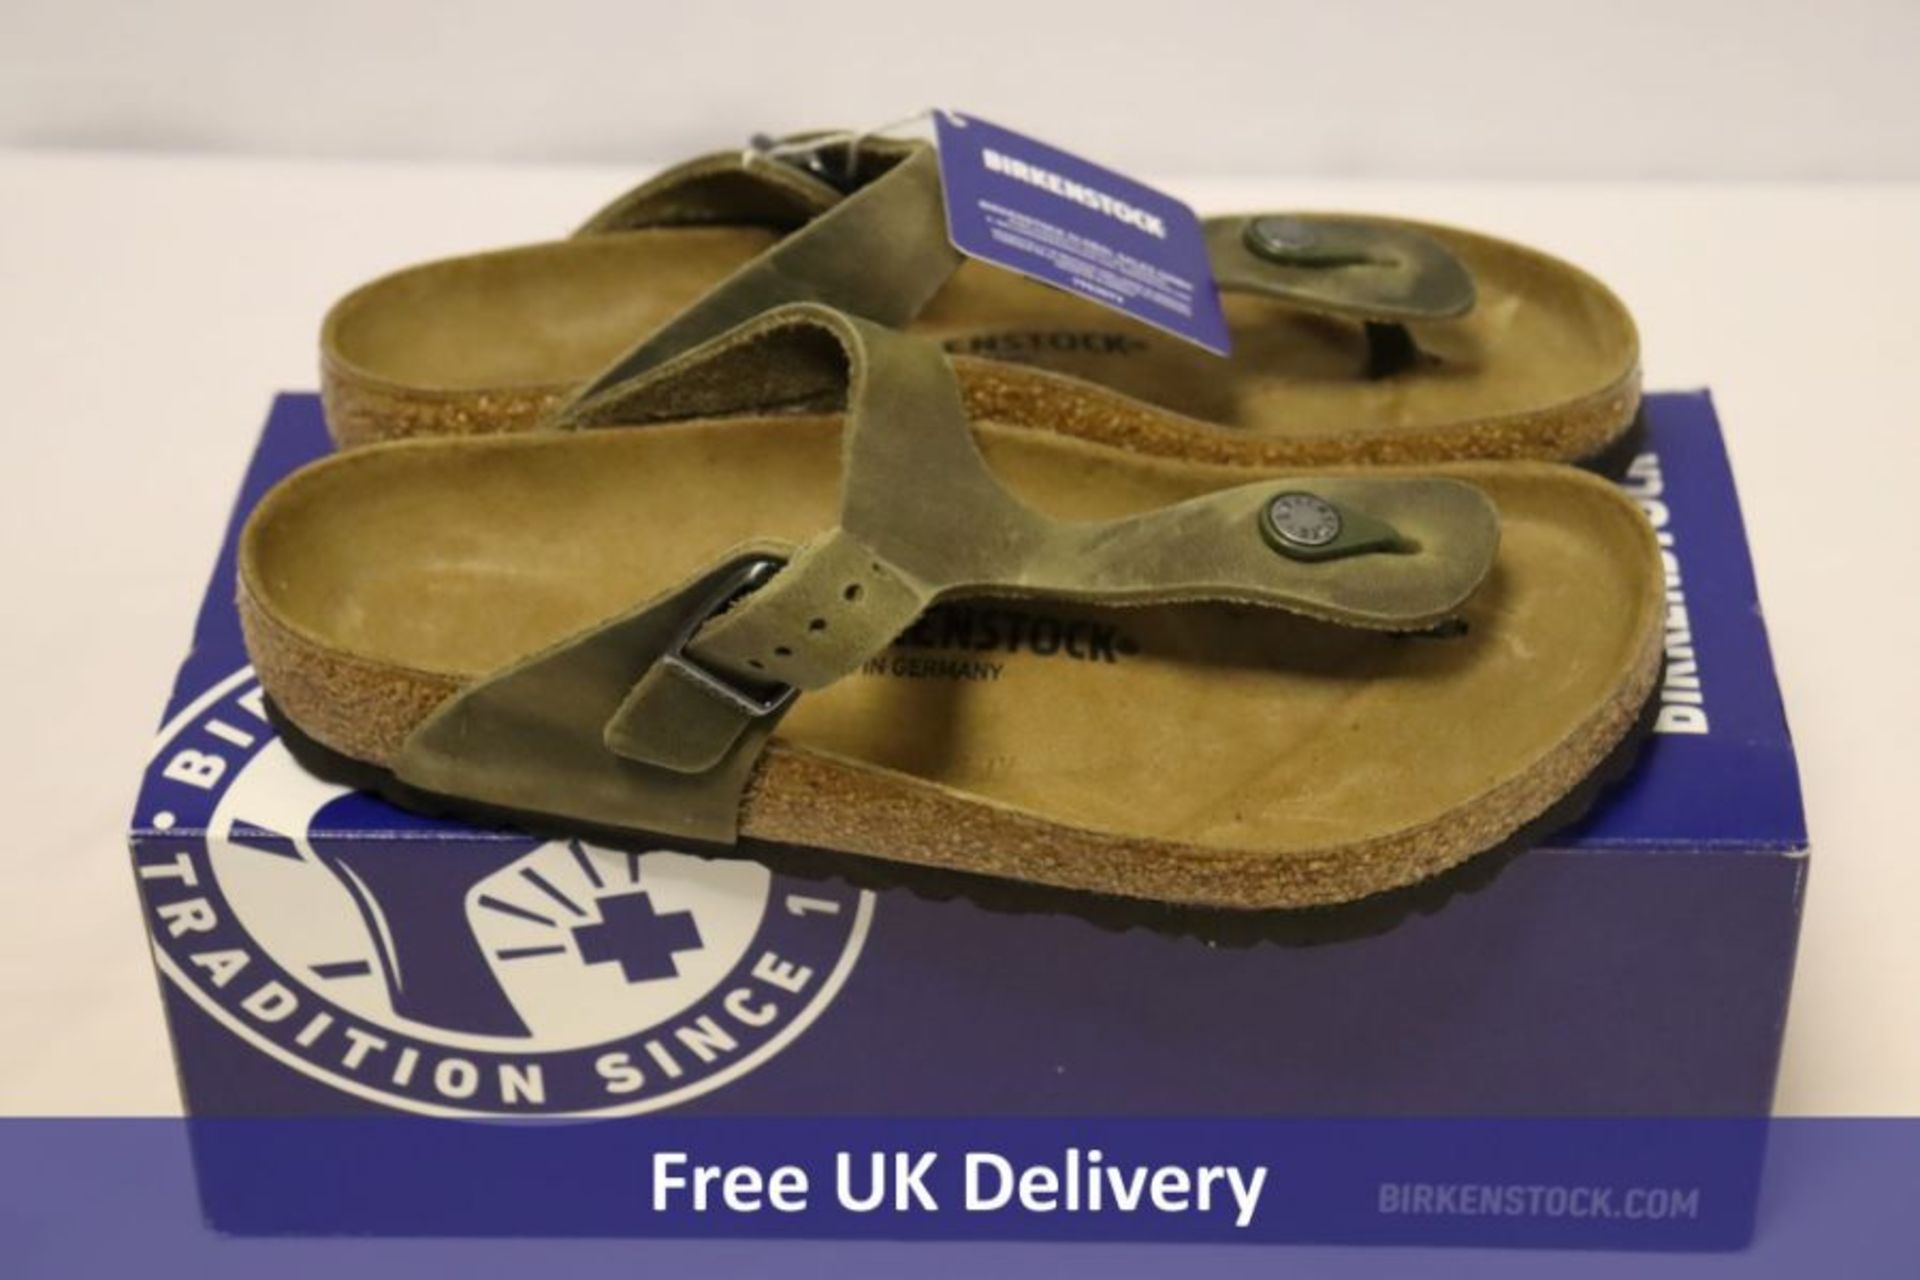 Birkenstock Unisex Gizeh BS Sandals, Faded Khaki, UK 5.5. Box damaged